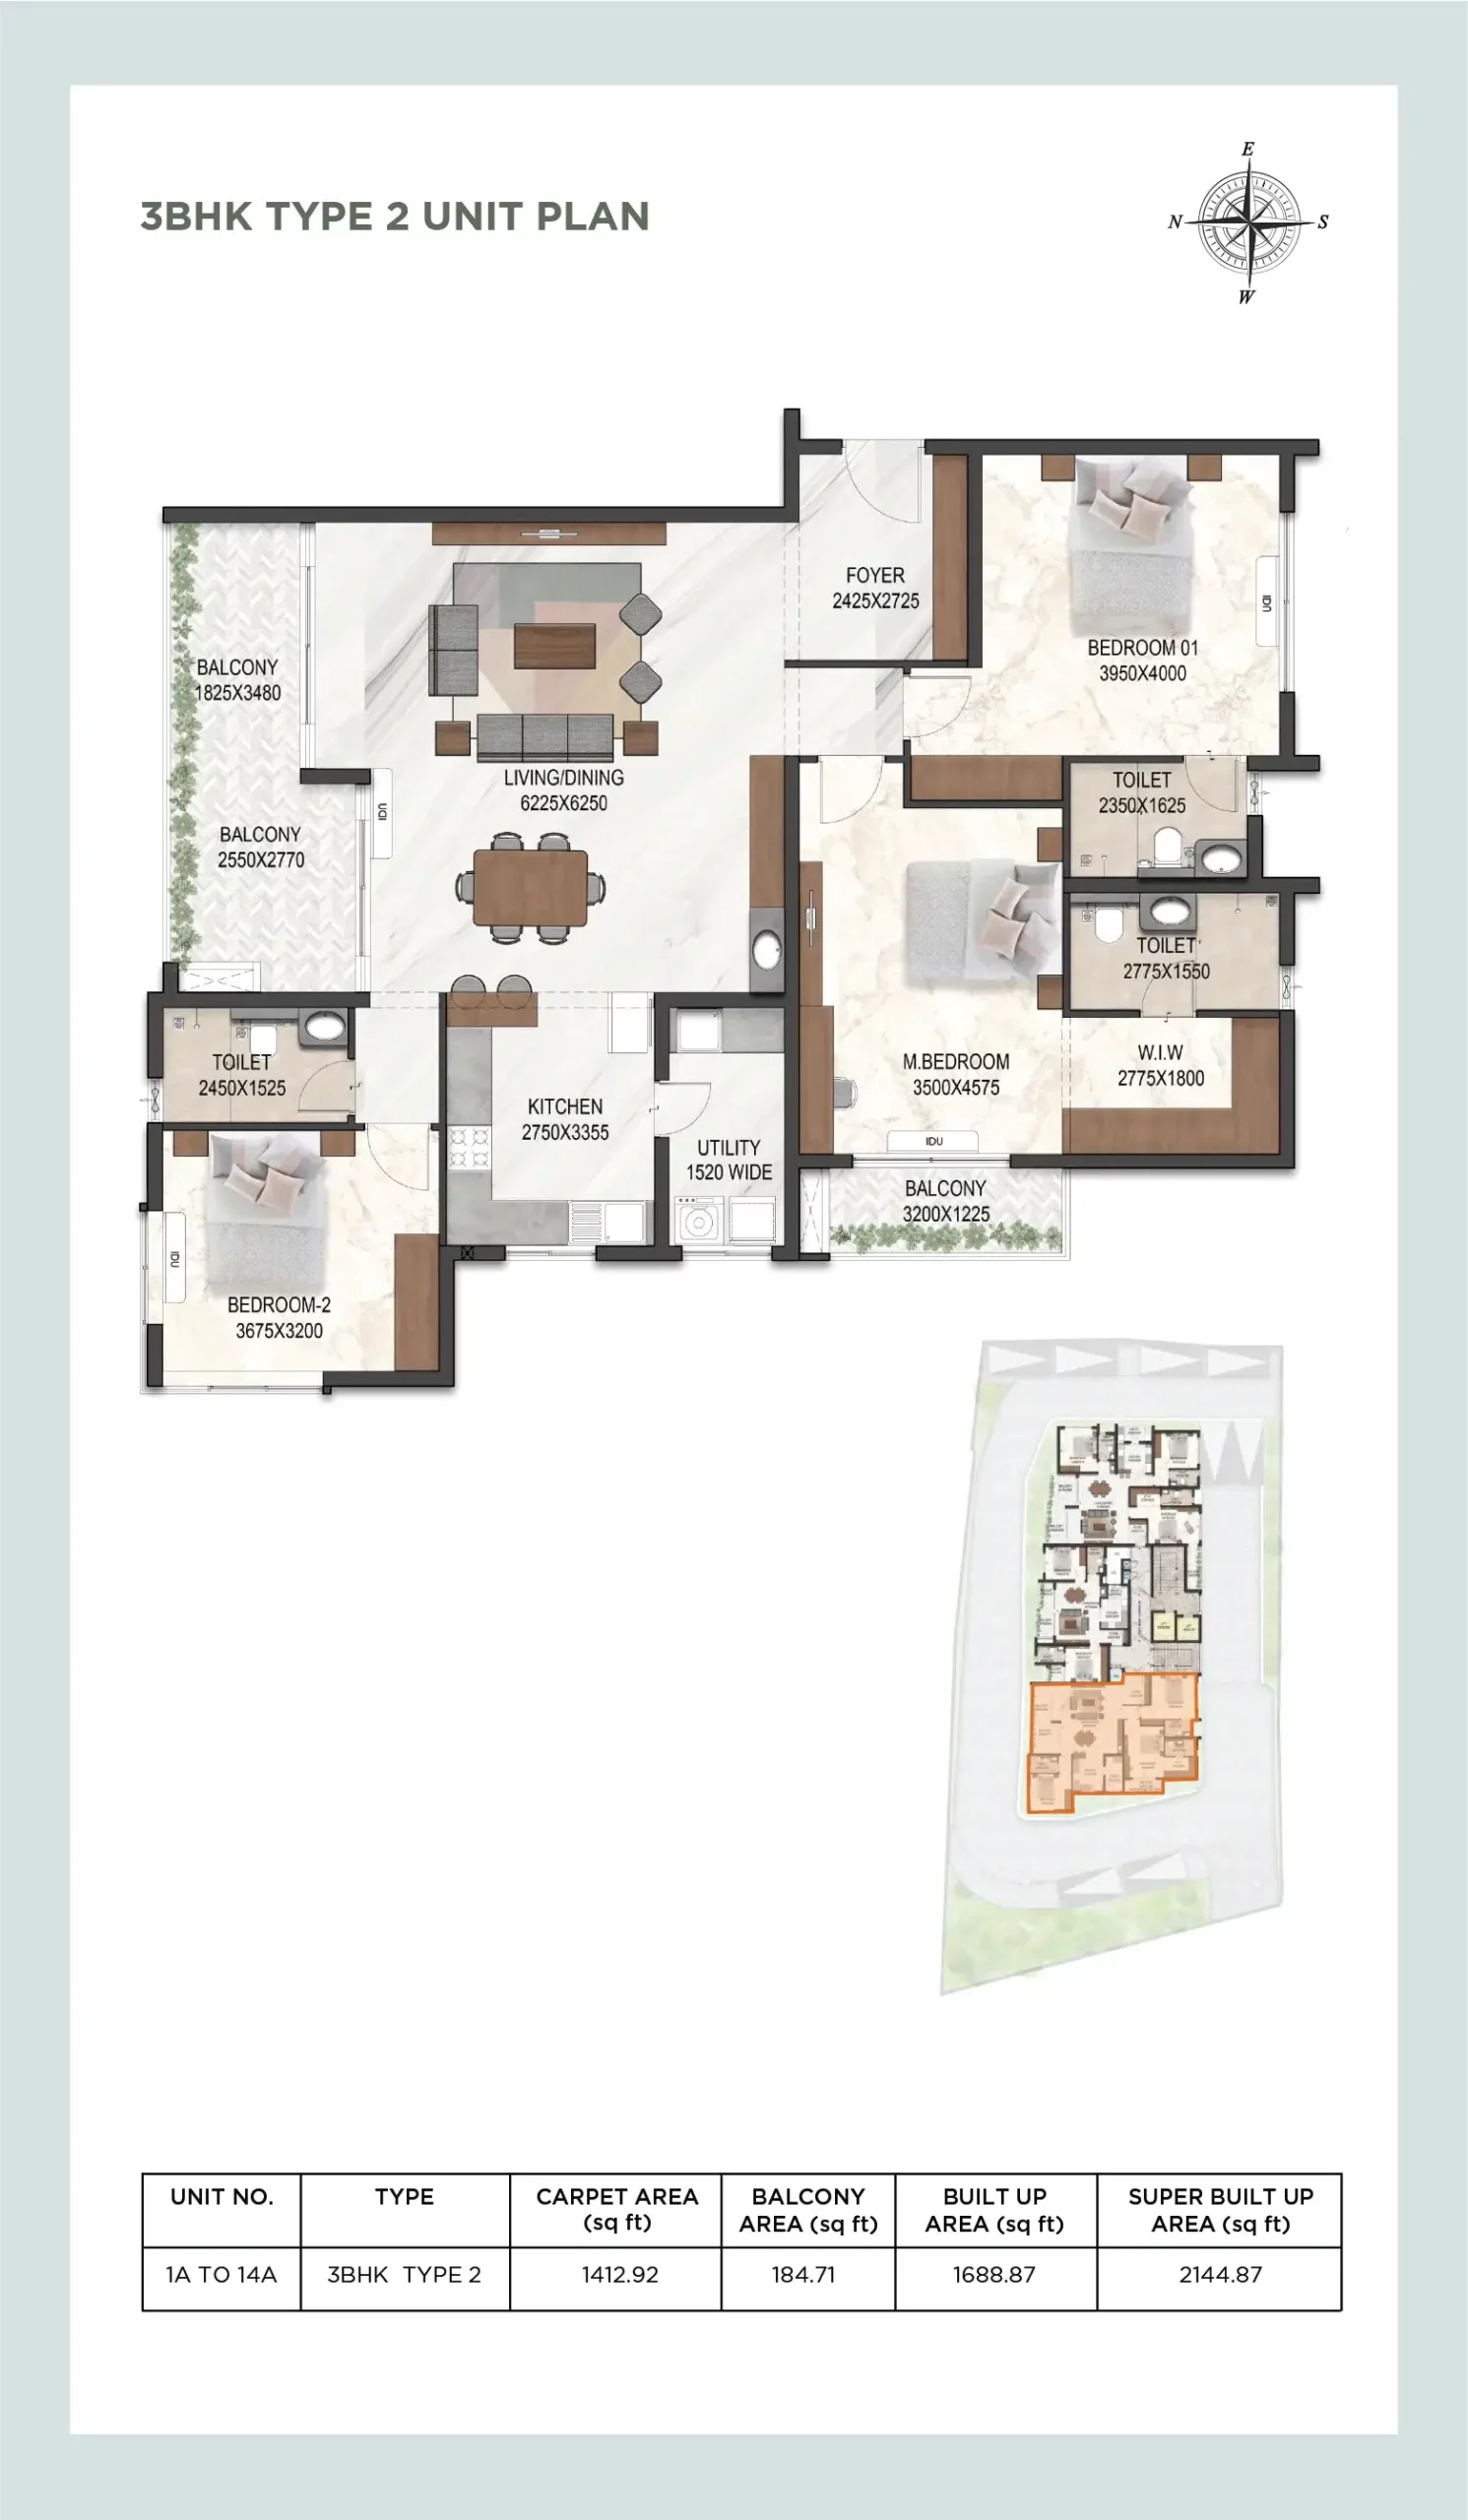 2144 sqft 3bhk floor plan in where dreams begin apartments in pattom, trivandrum